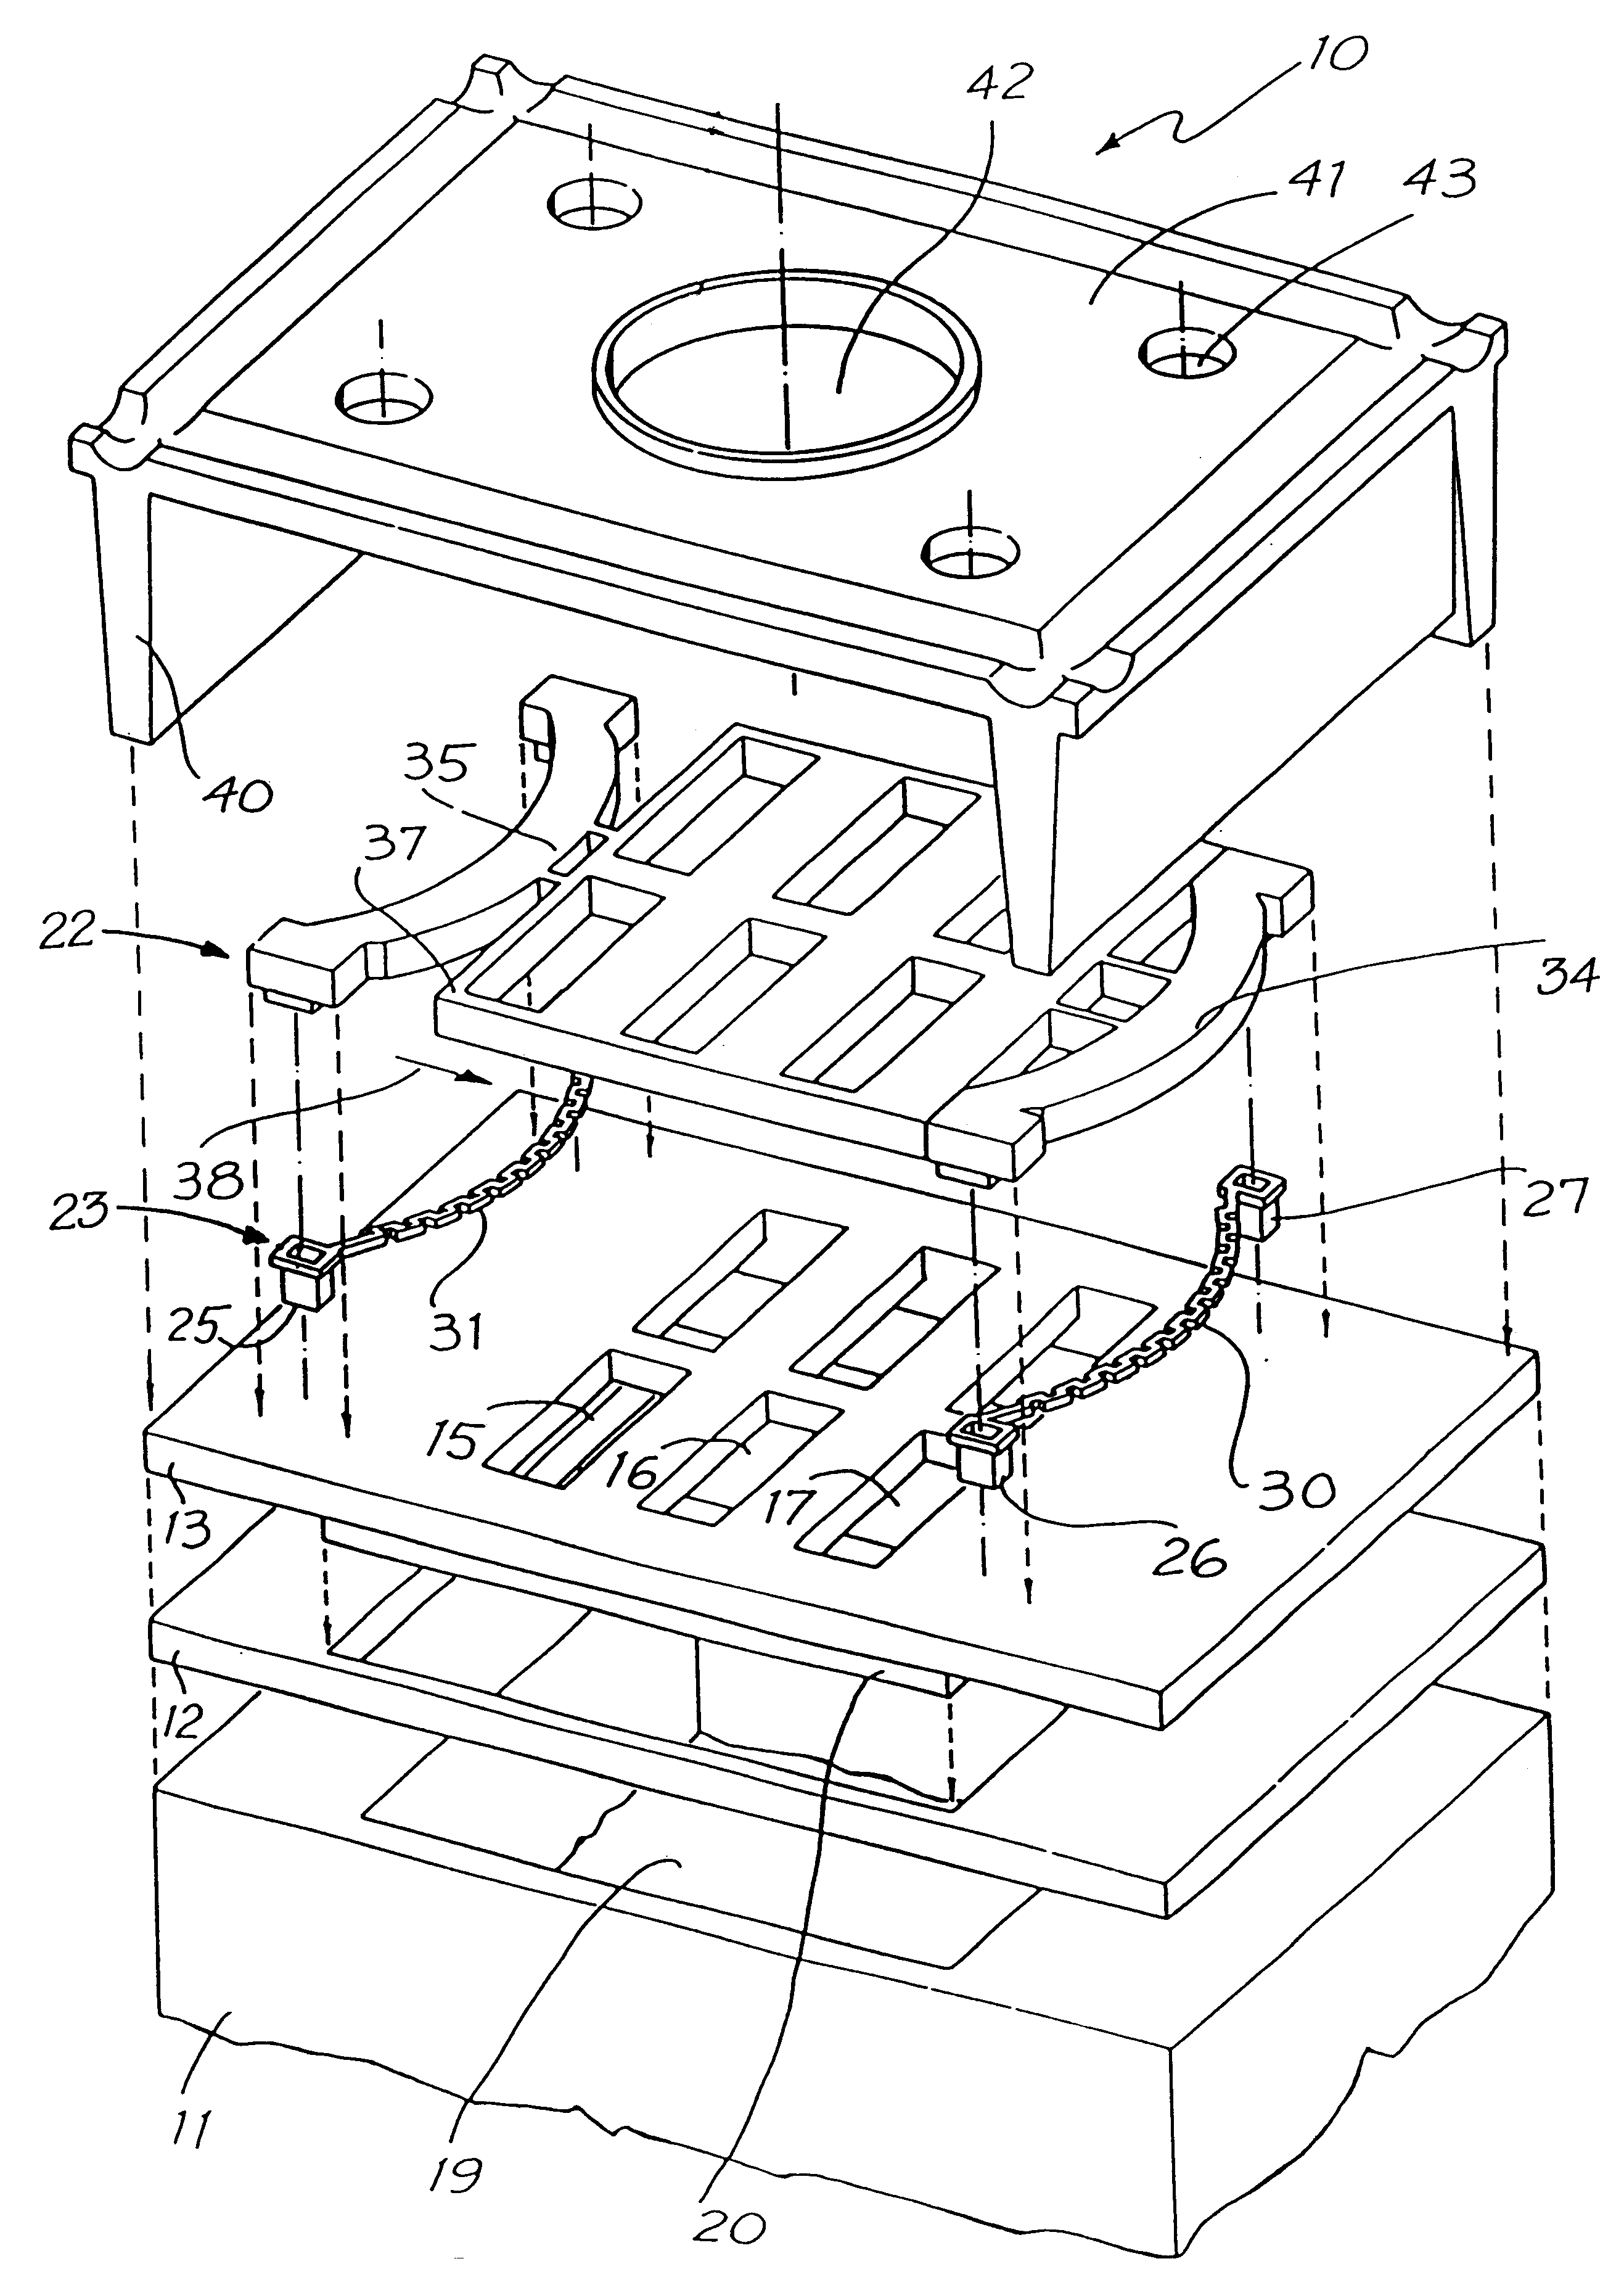 Buckle grill oscillating pressure ink jet printing mechanism